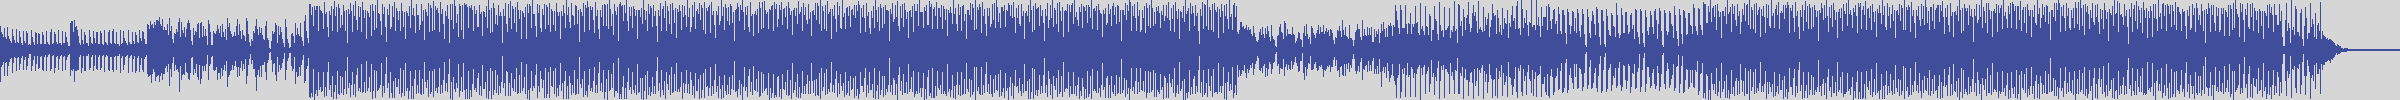 nf_boyz_records [NFY028] Fashion Boyz - Slide [Aperitif Mix] audio wave form